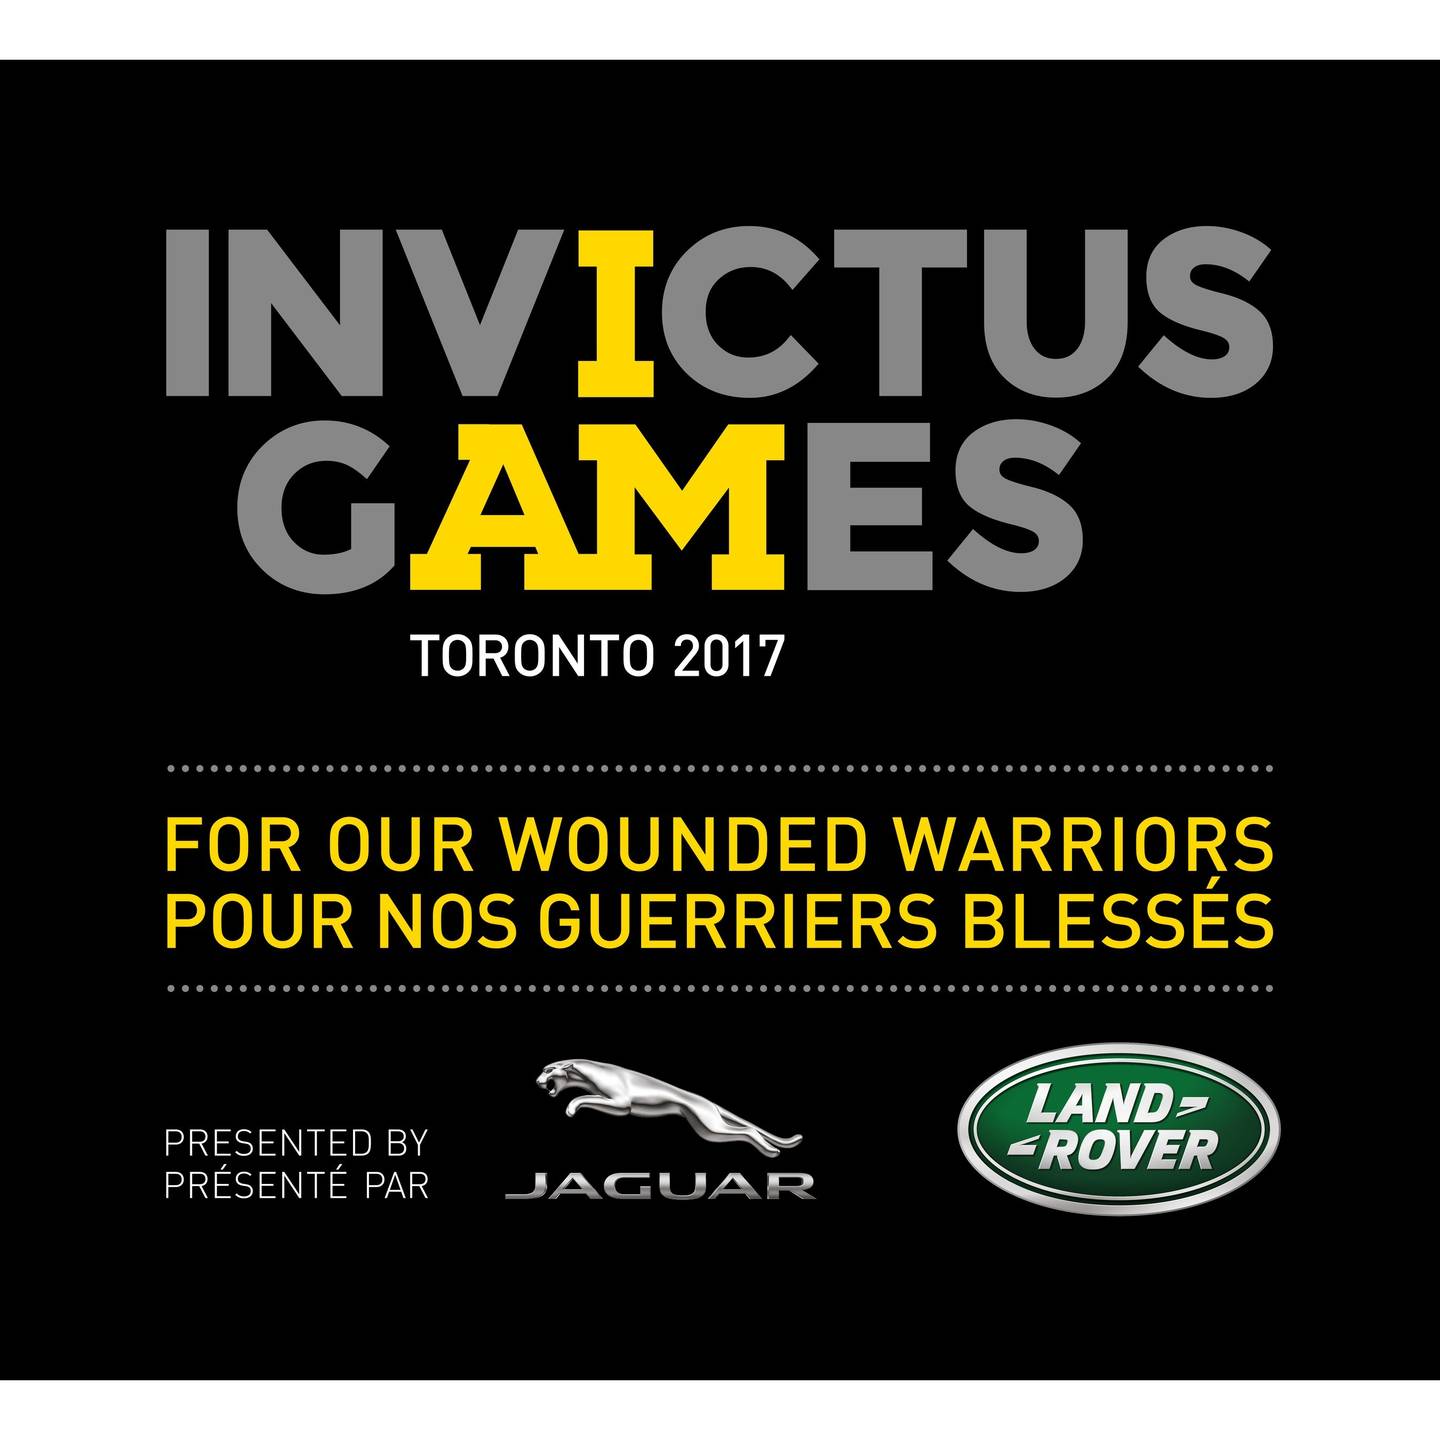 Invictus Games Toronto logo